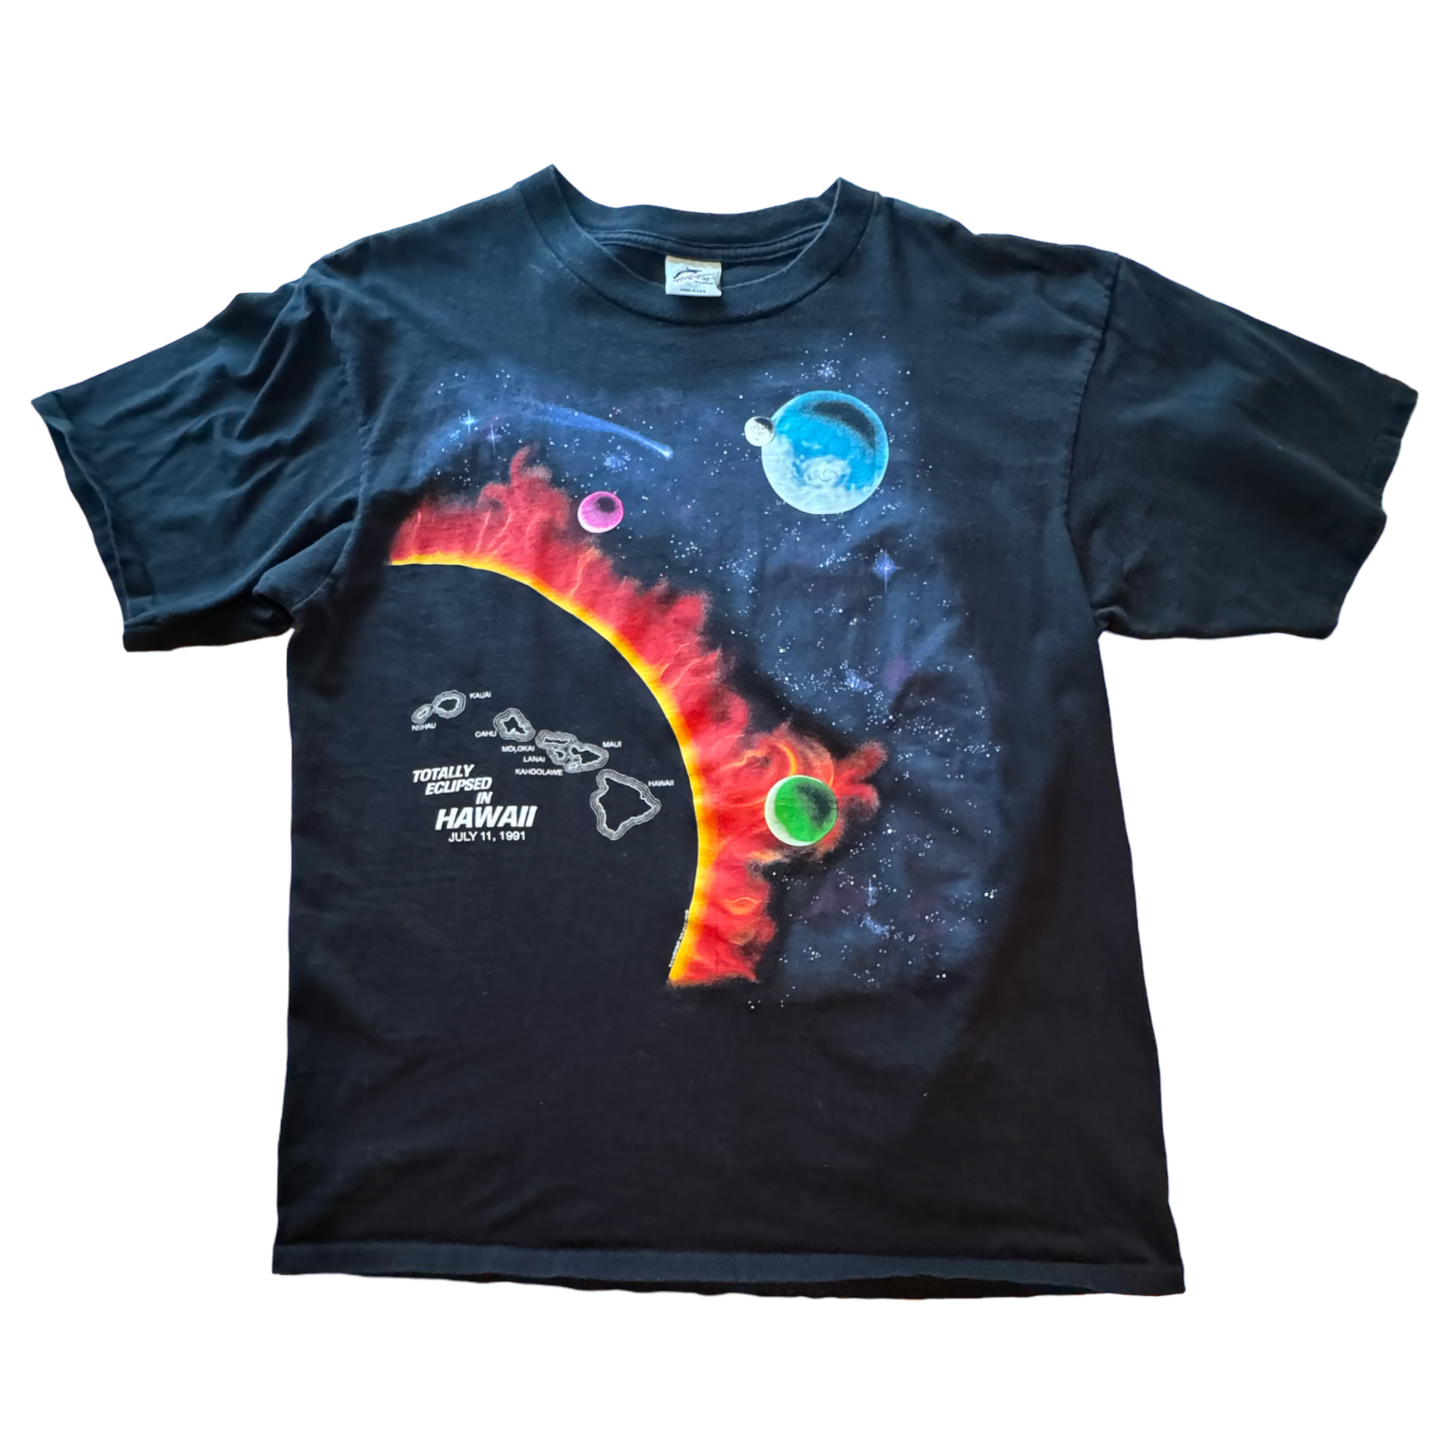 Harlequin N.G. - 1990 Total Eclipse in Hawaii Graphic Big Print Vintage T-Shirt